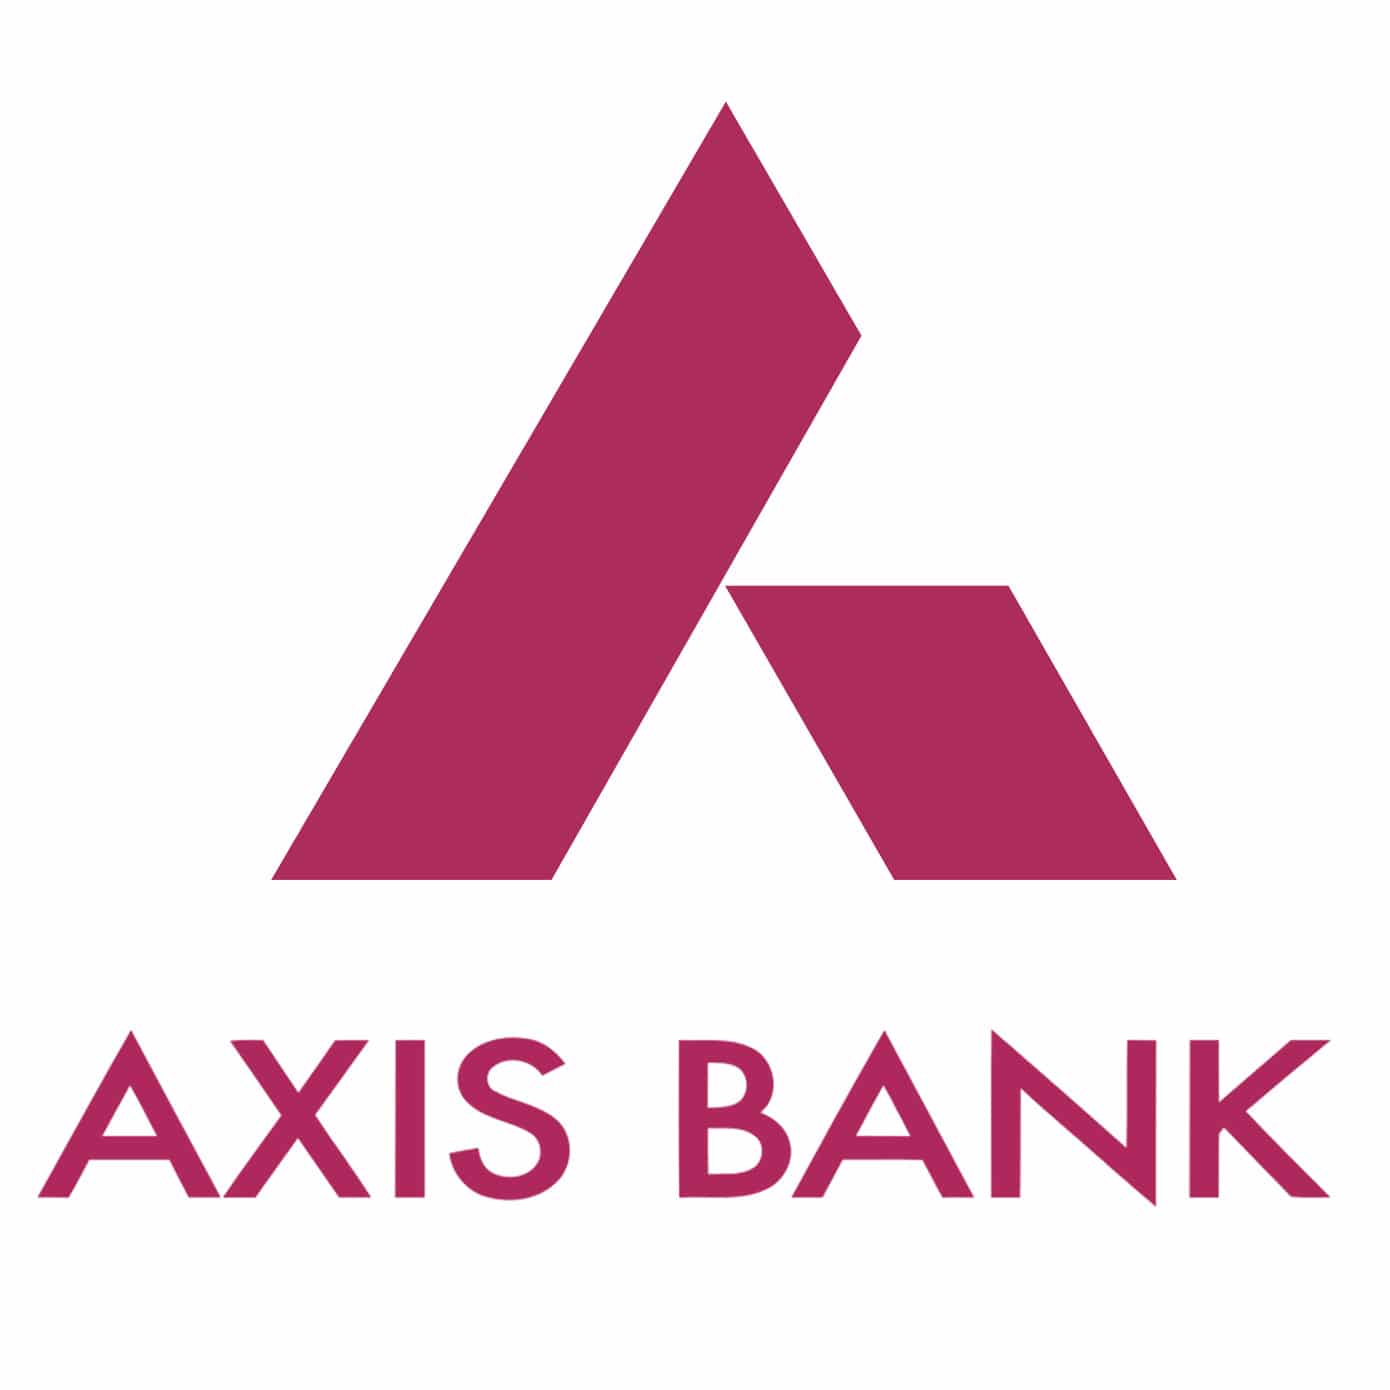 Axis Bank Stock